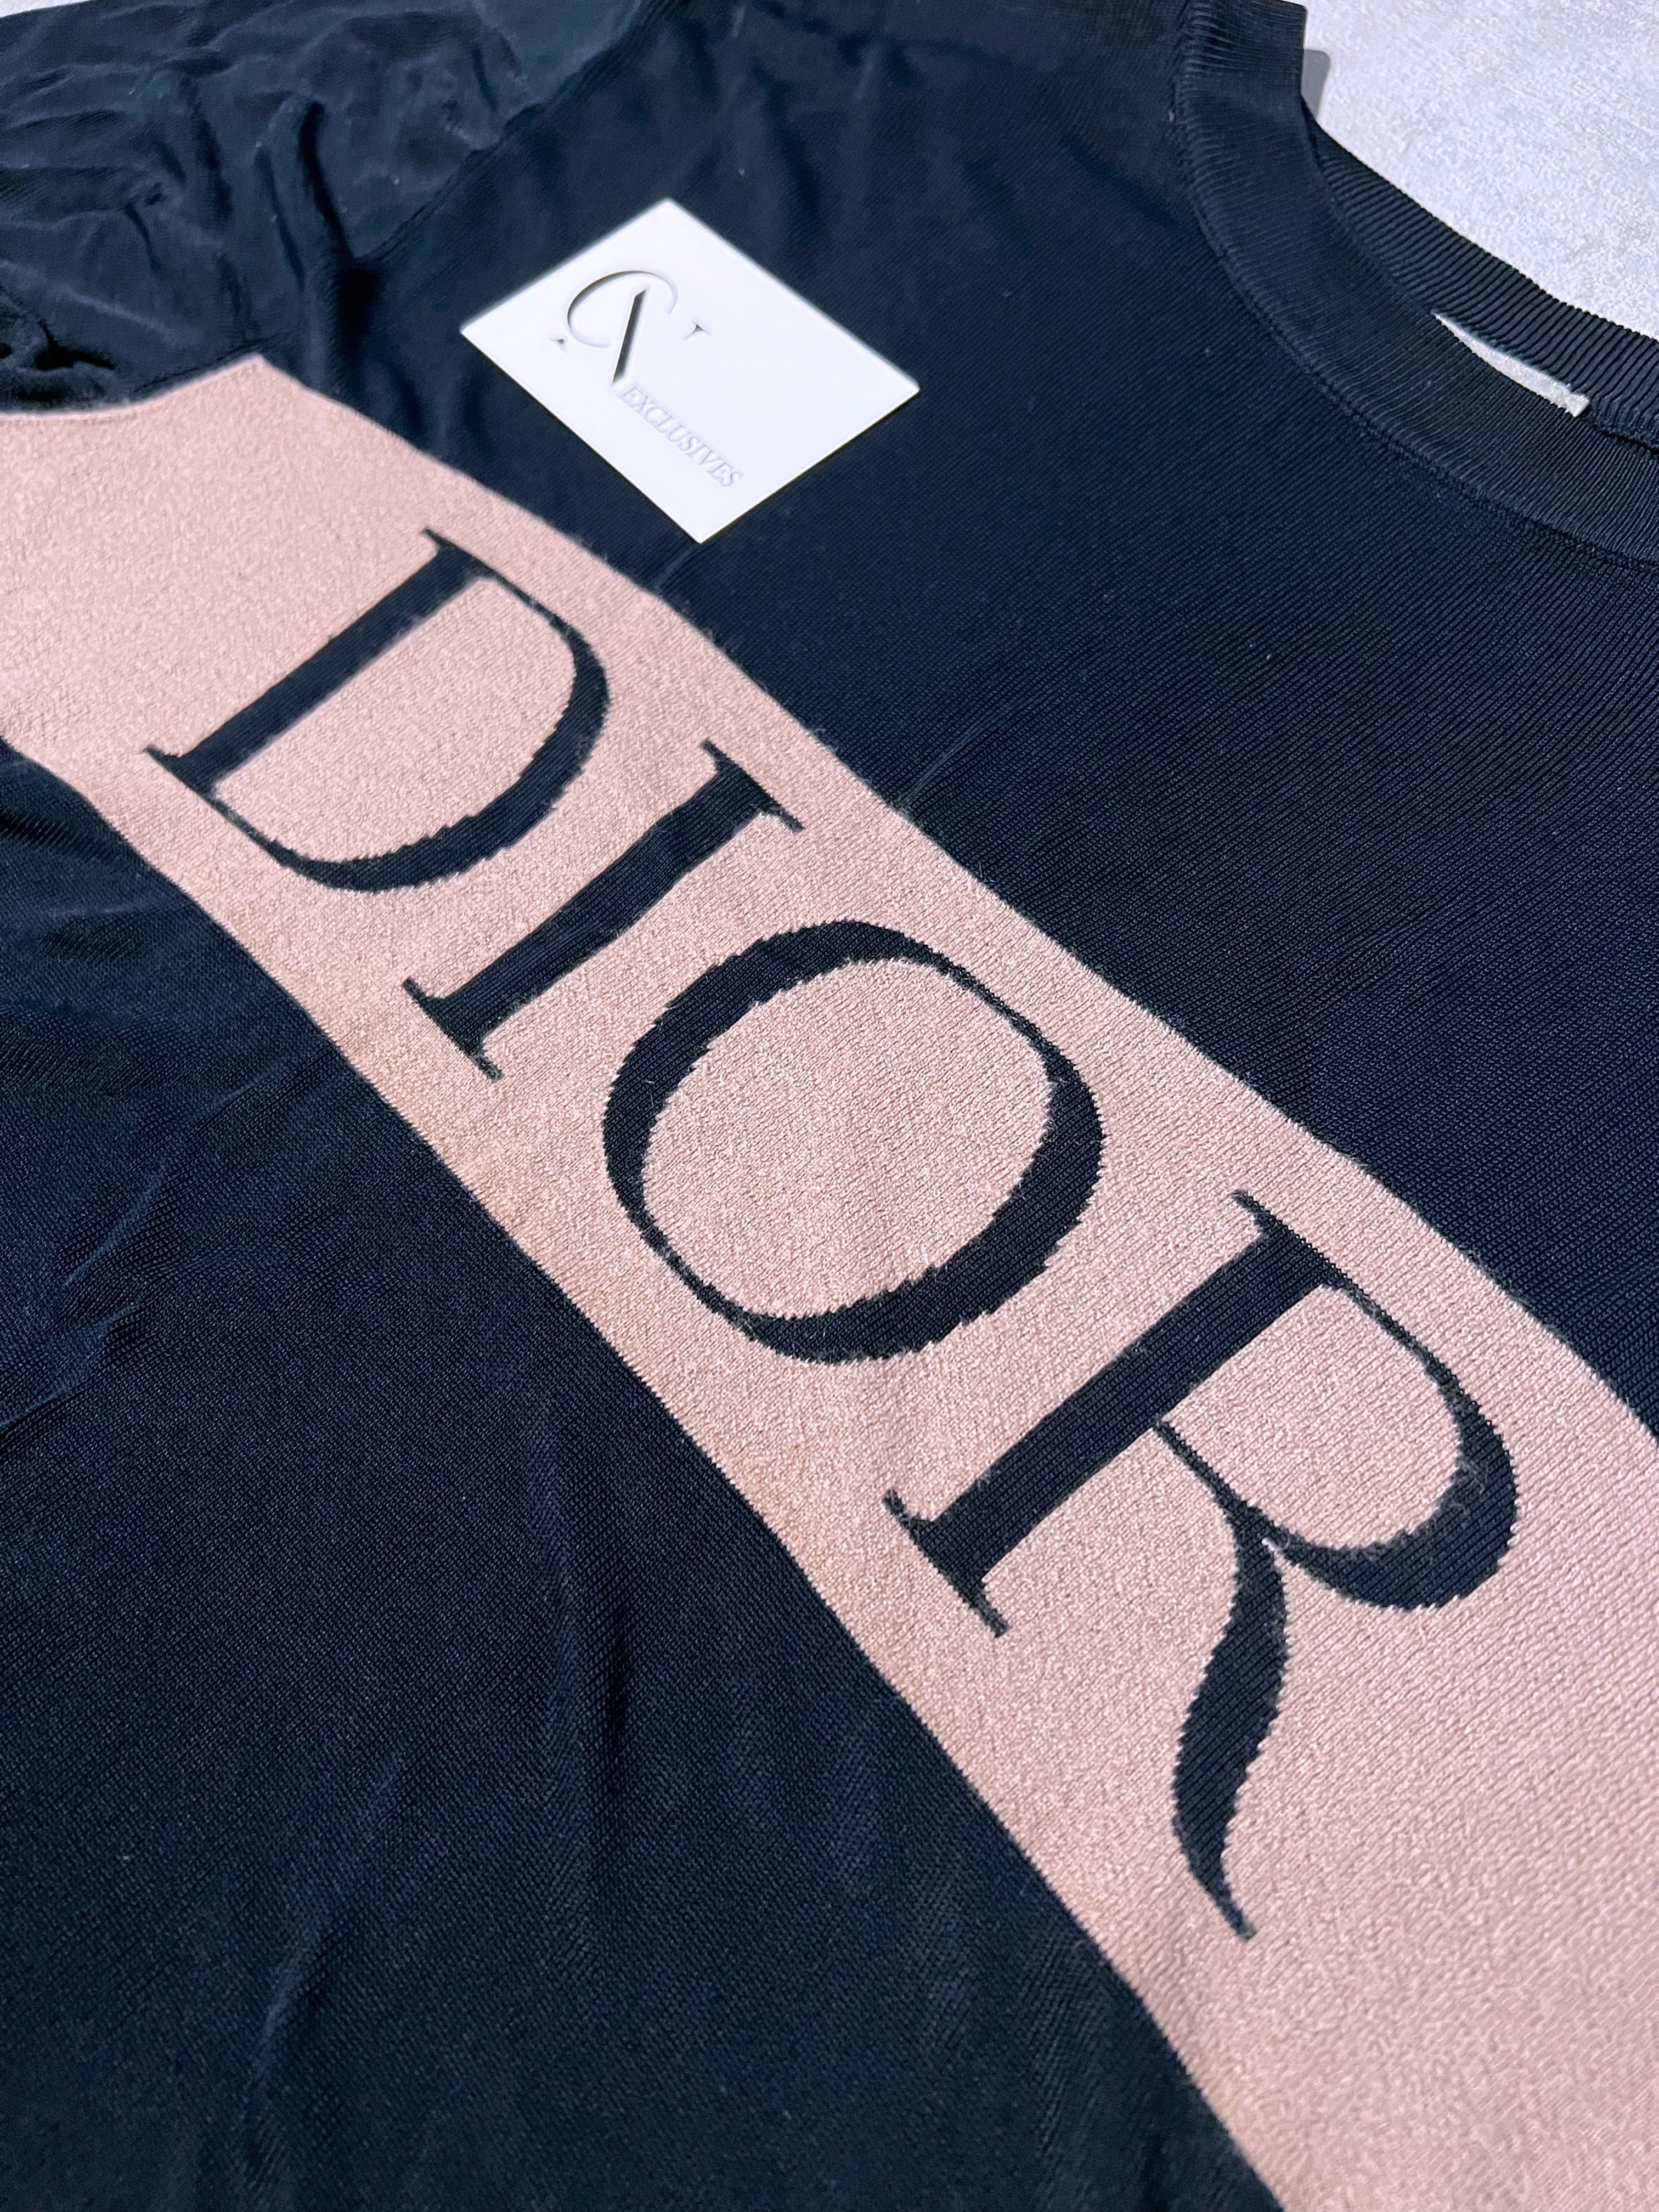 Dior Cashmere T-Shirt